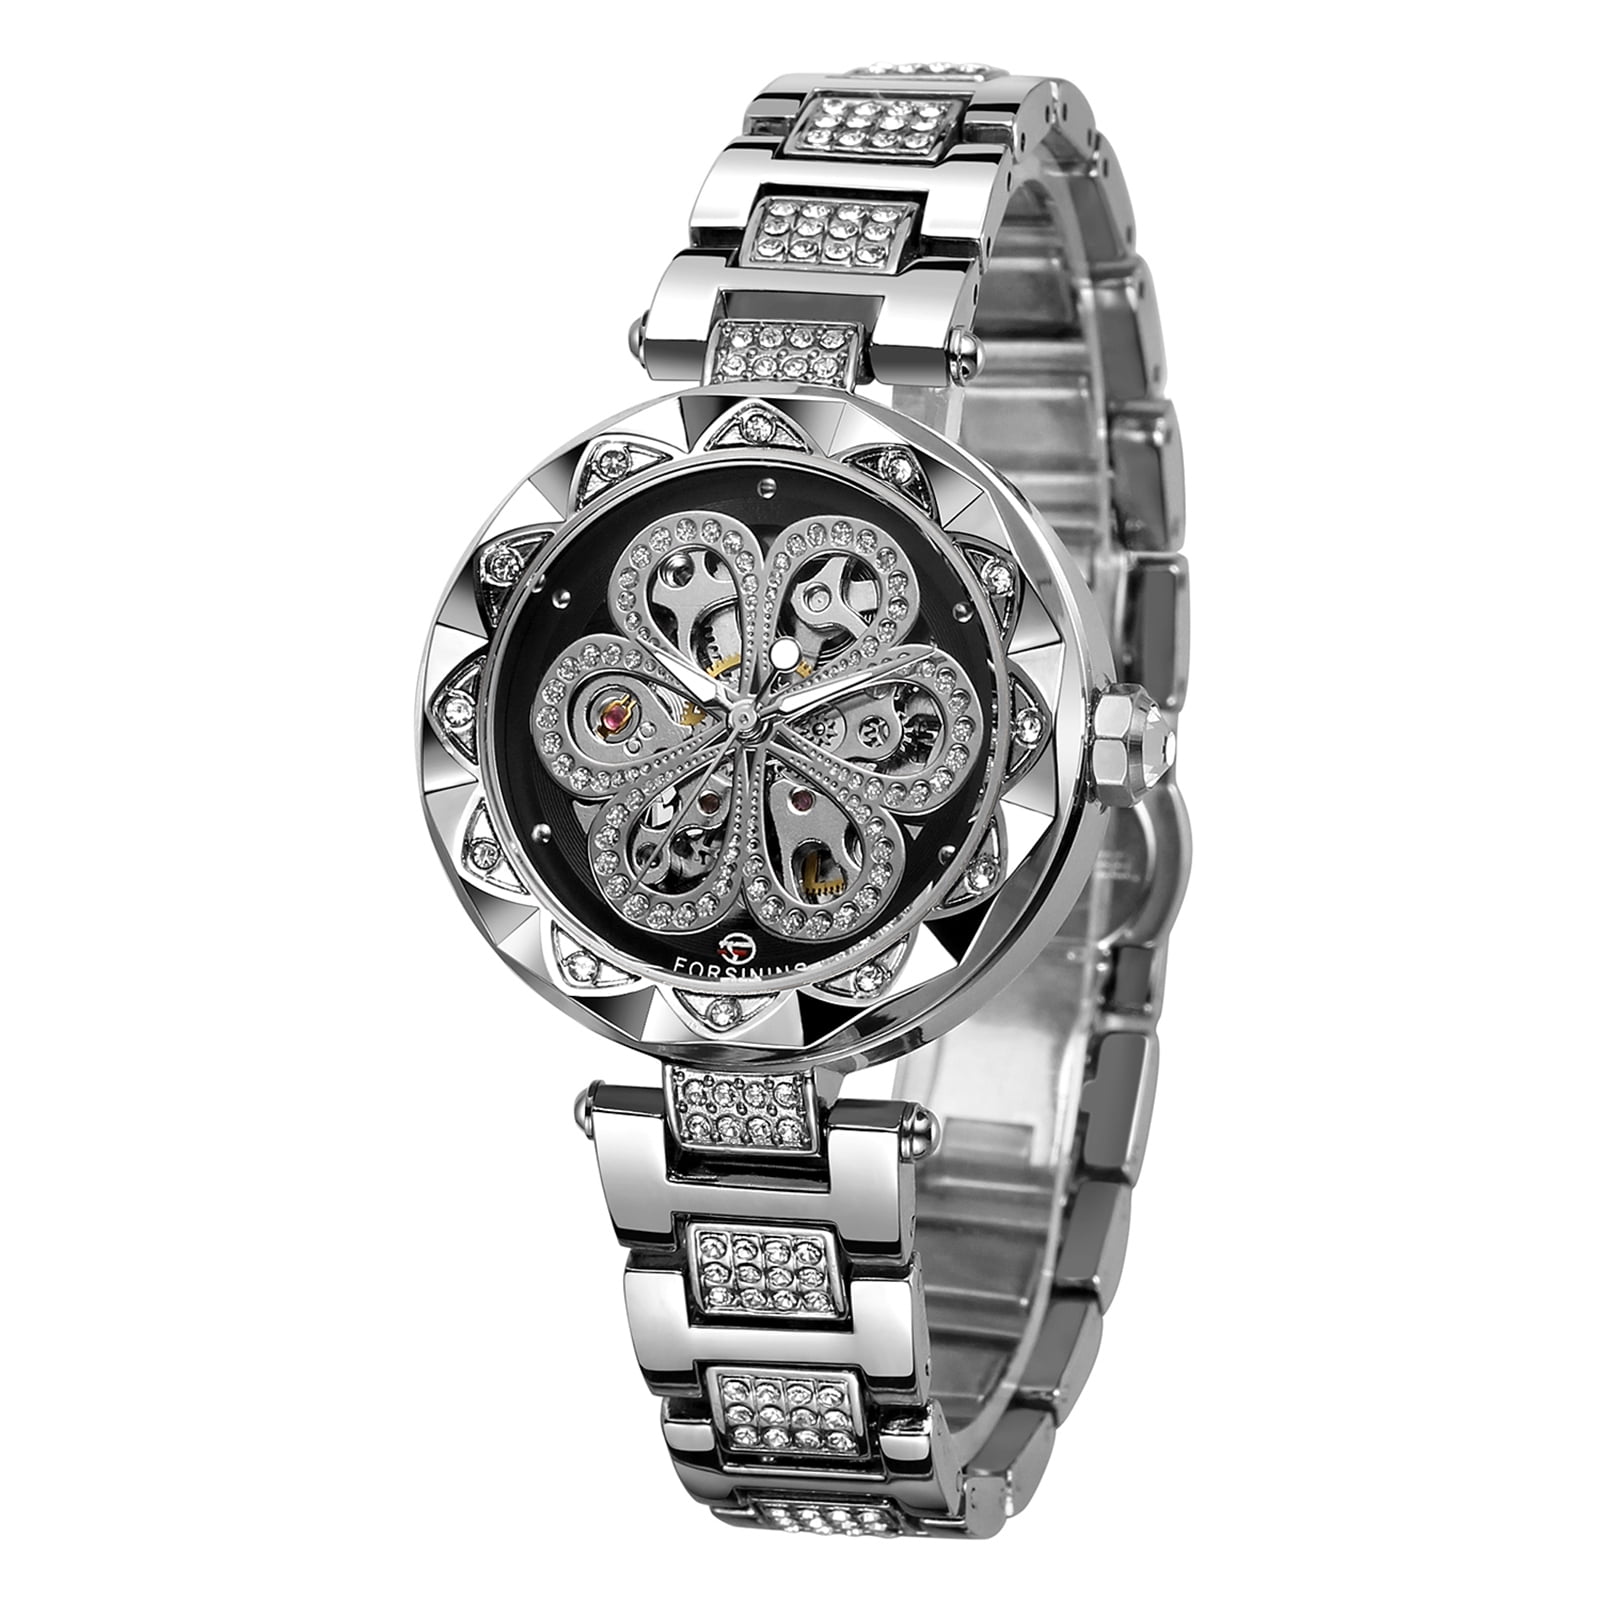 Kenneth Cole Men's New York Automatic Watch 10019494 - Walmart.com